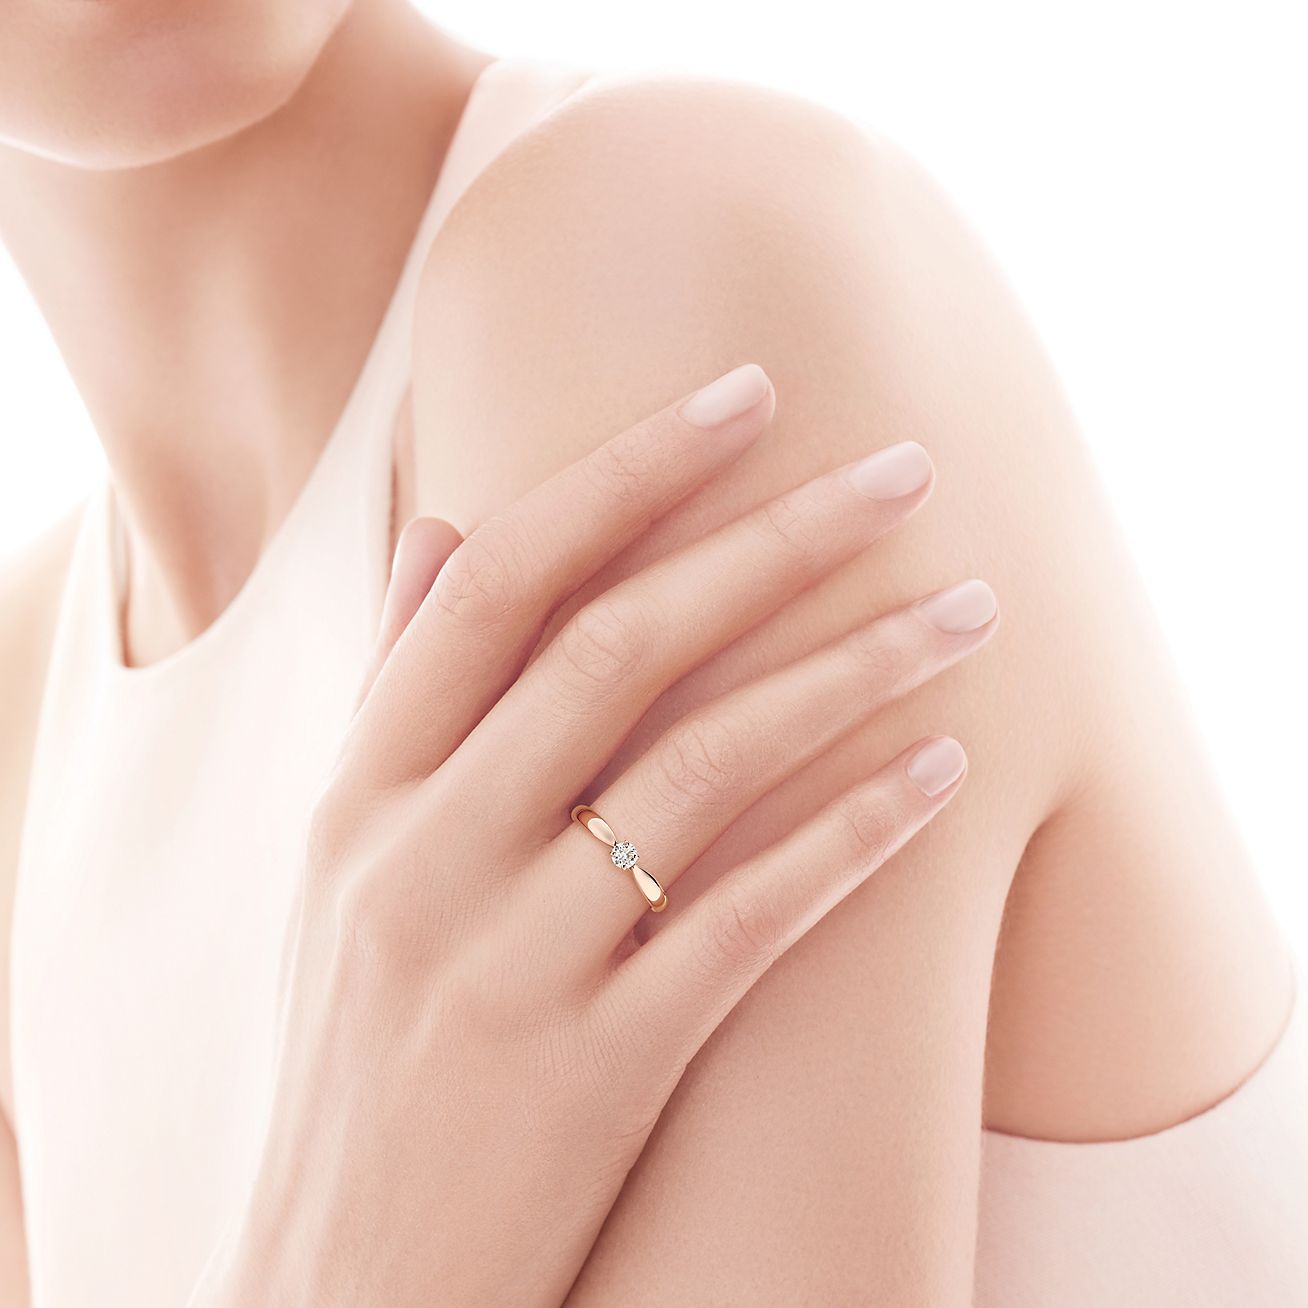 Tiffany Harmony® ring in 18k rose gold 